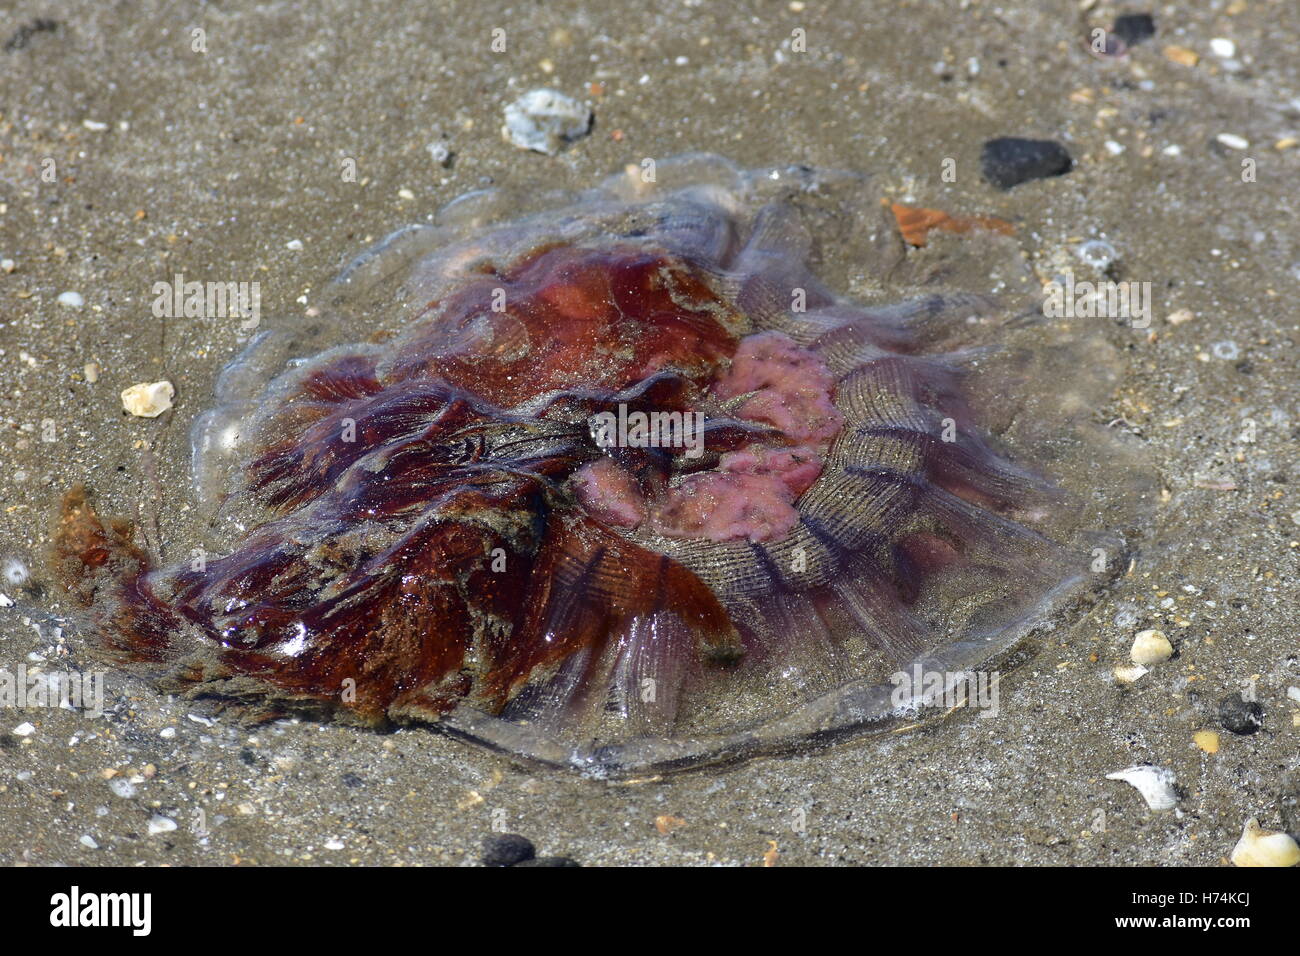 Large jellyfish washed up on the sand. Stock Photo